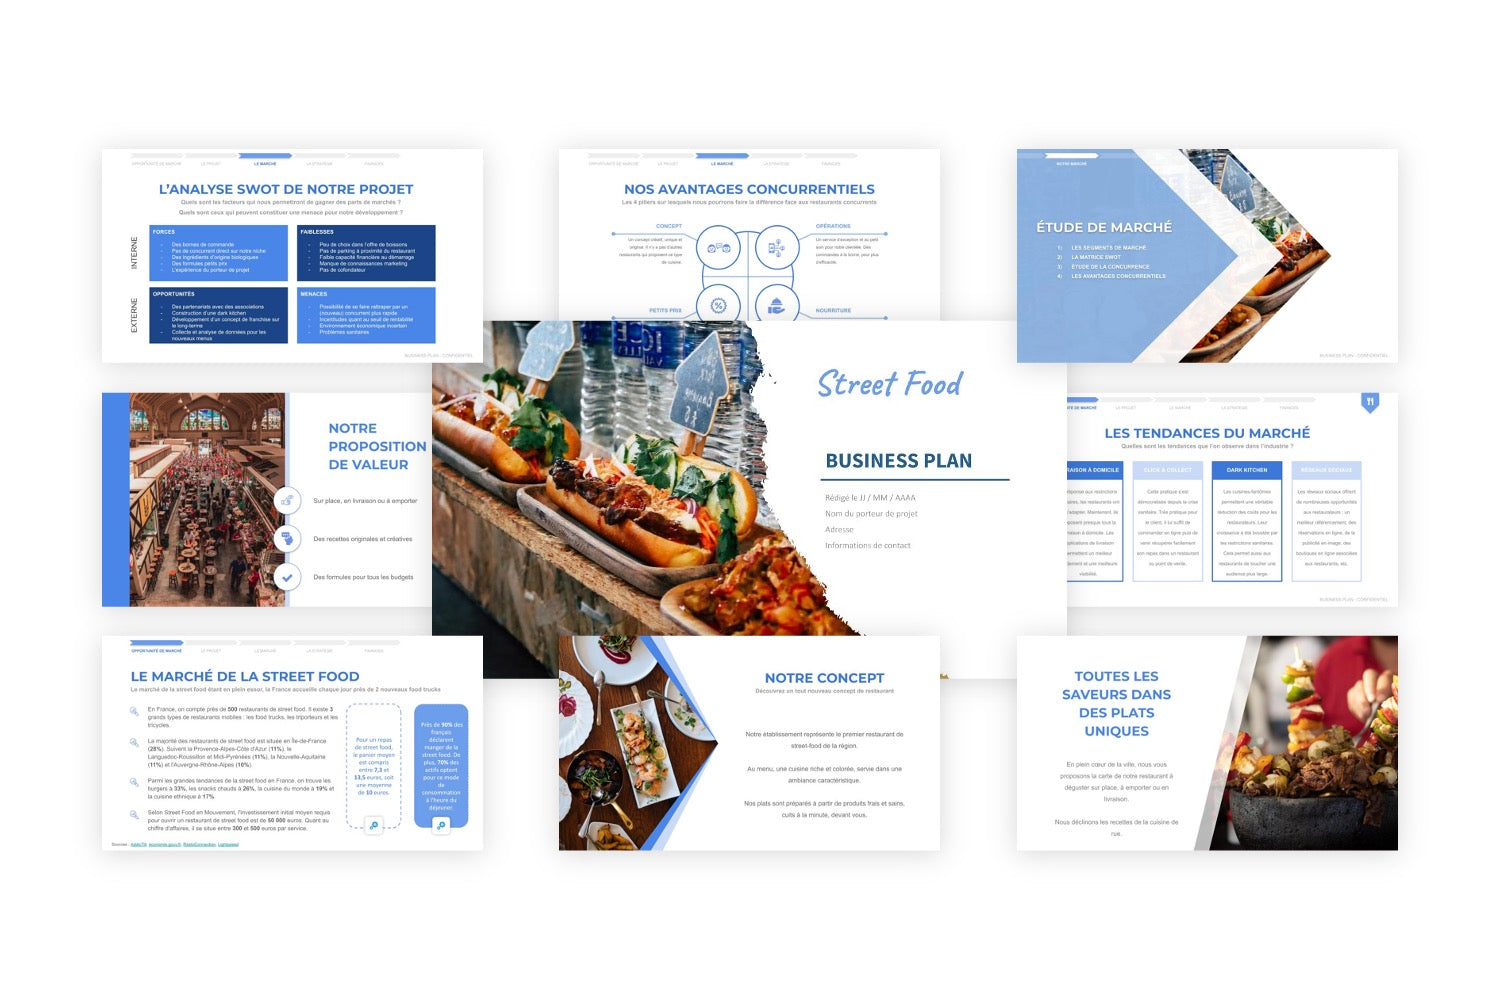 Restaurant Street Food Business Plan